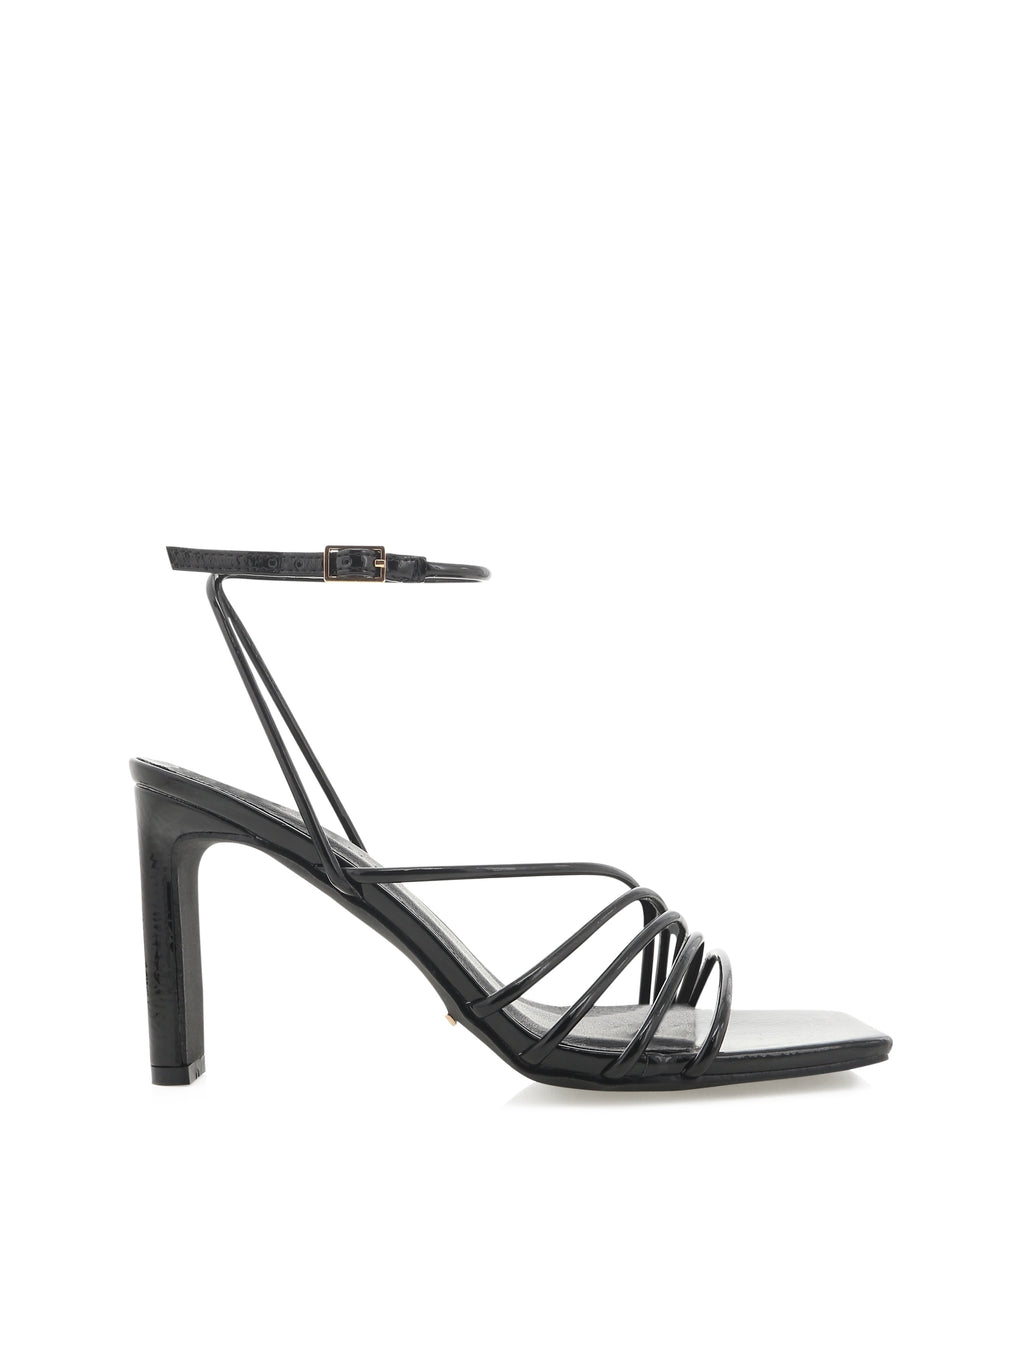 Denise Asymmetric Strappy Heel in Black Crinkle Patent